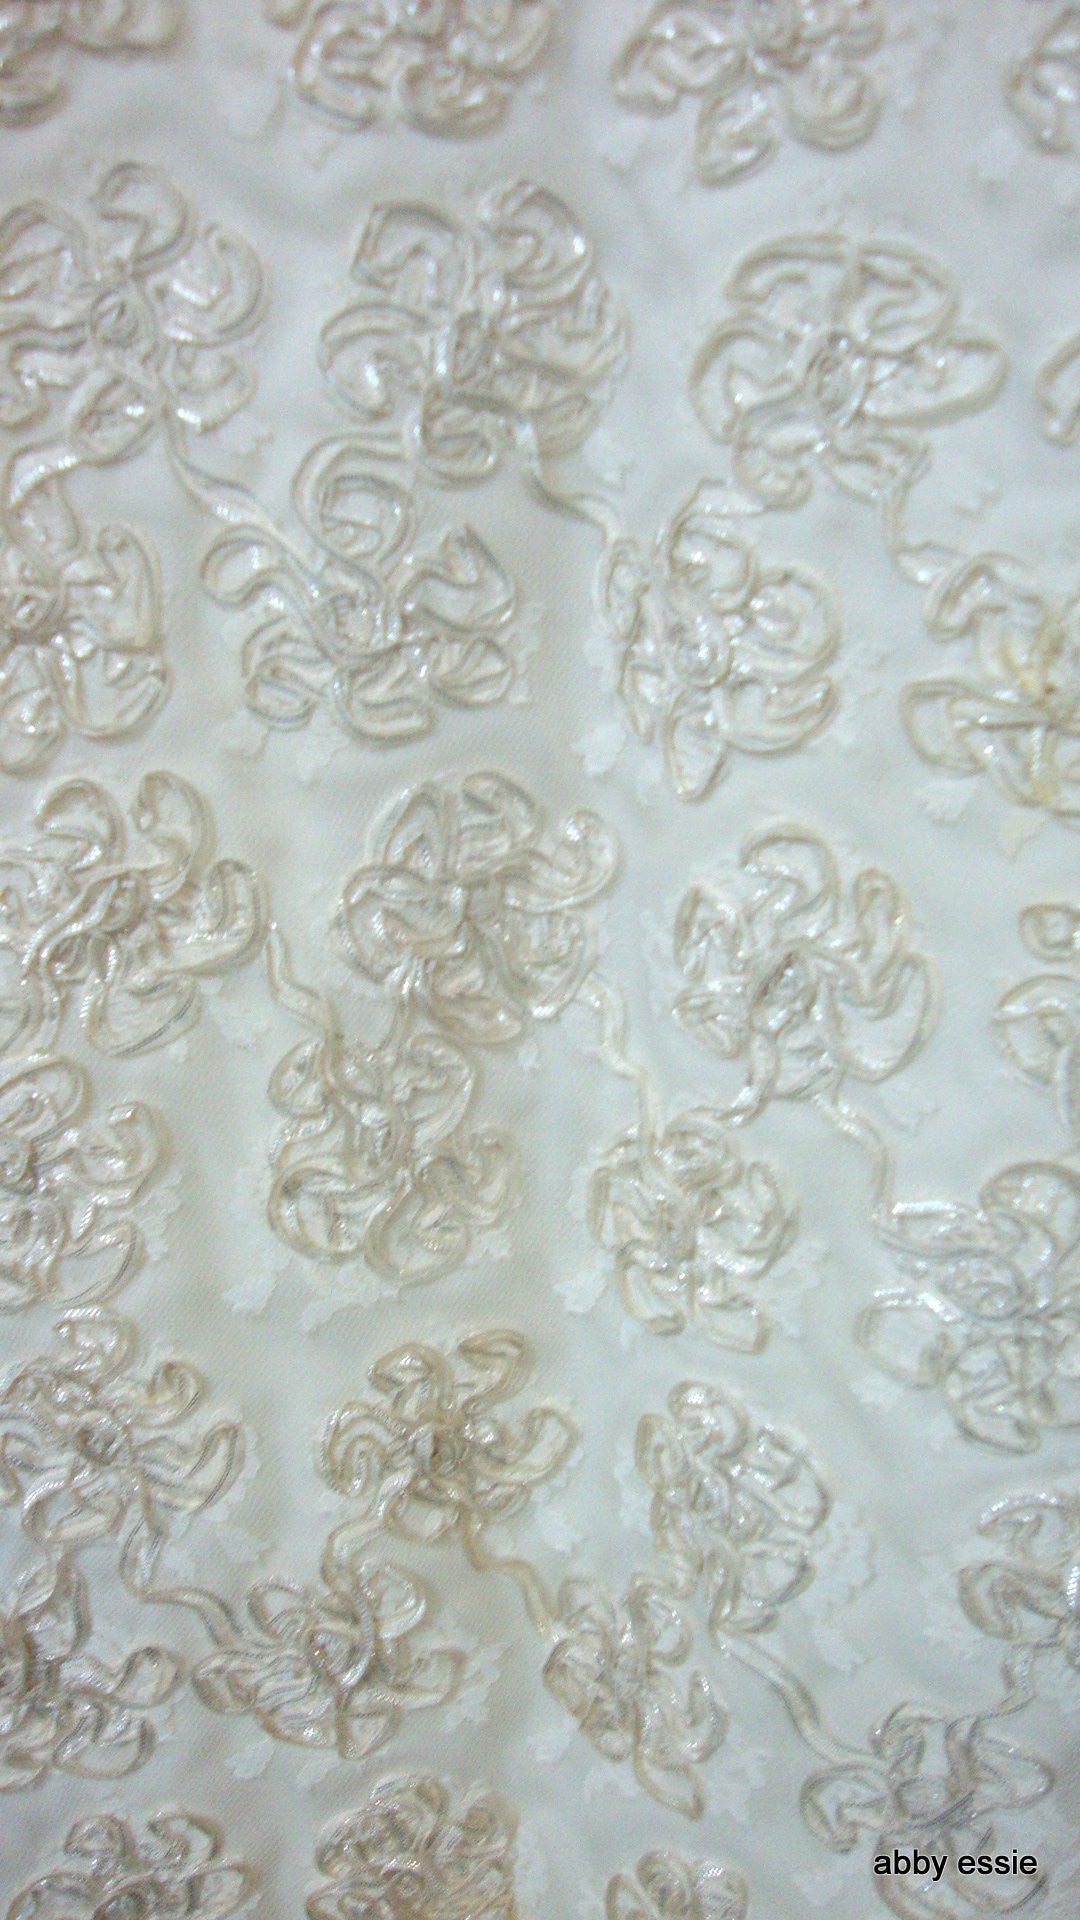 Vintage Mike Benet Wedding Cream White Floral Rosette Design Dress Small Abby Essie